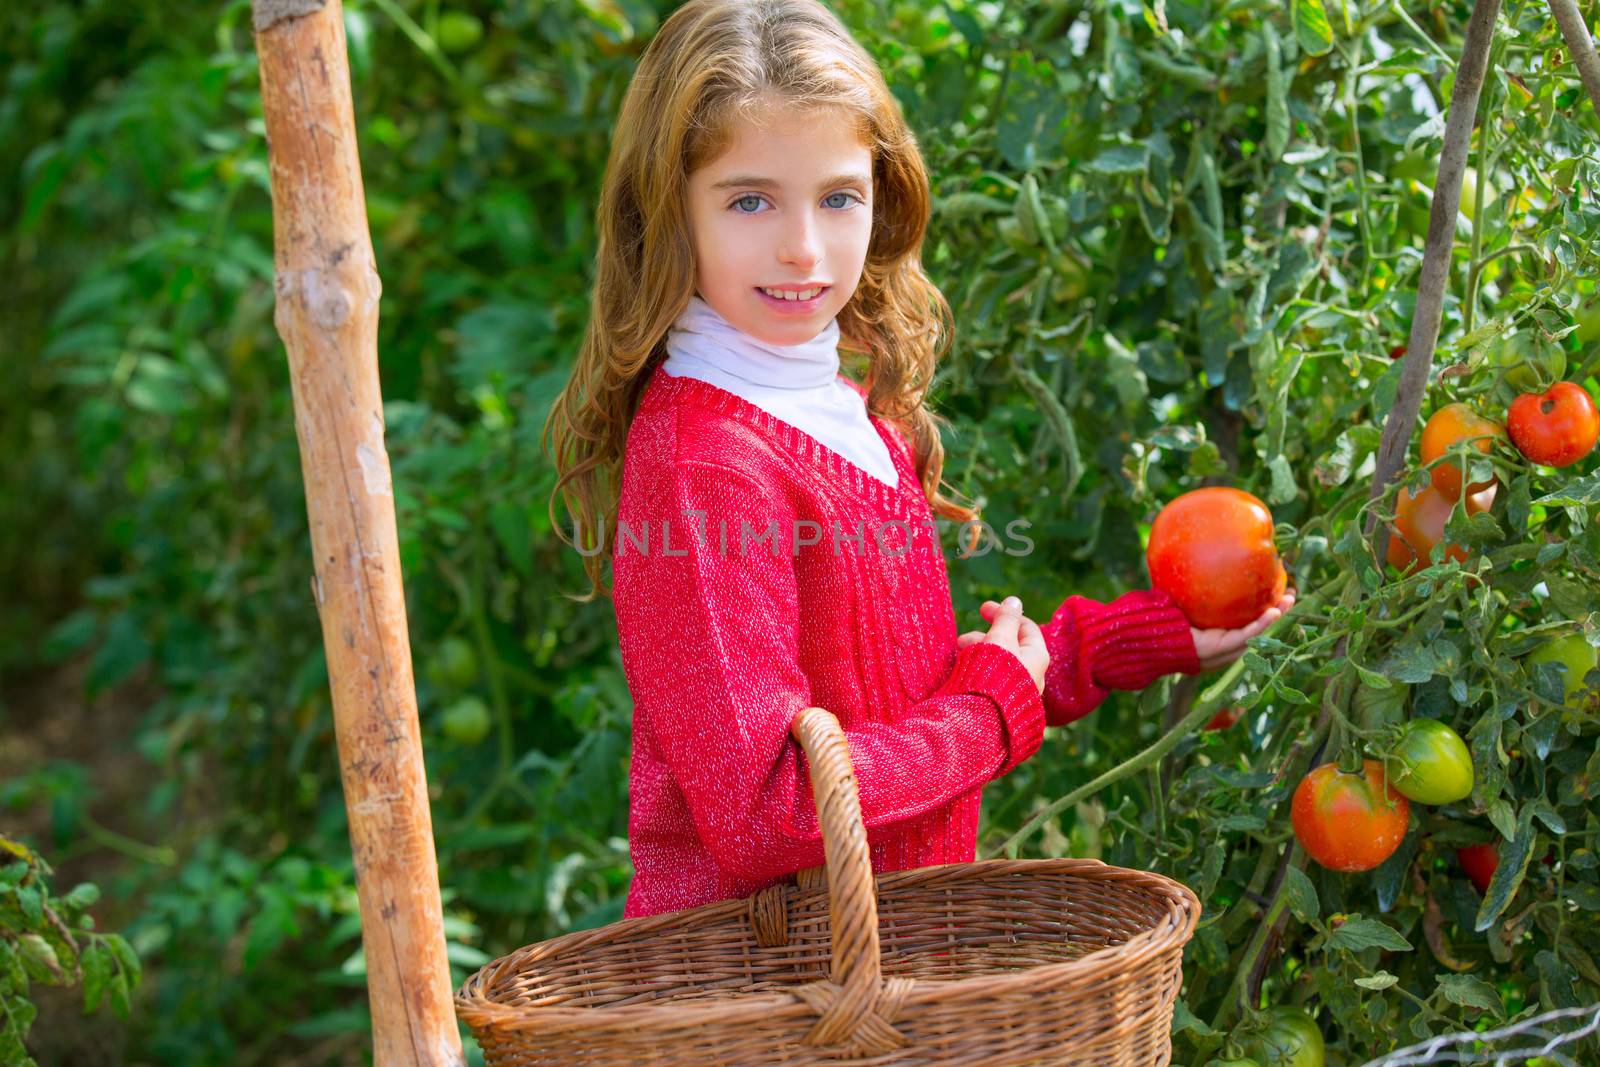 Farmer kid girl harvesting tomatoes by lunamarina